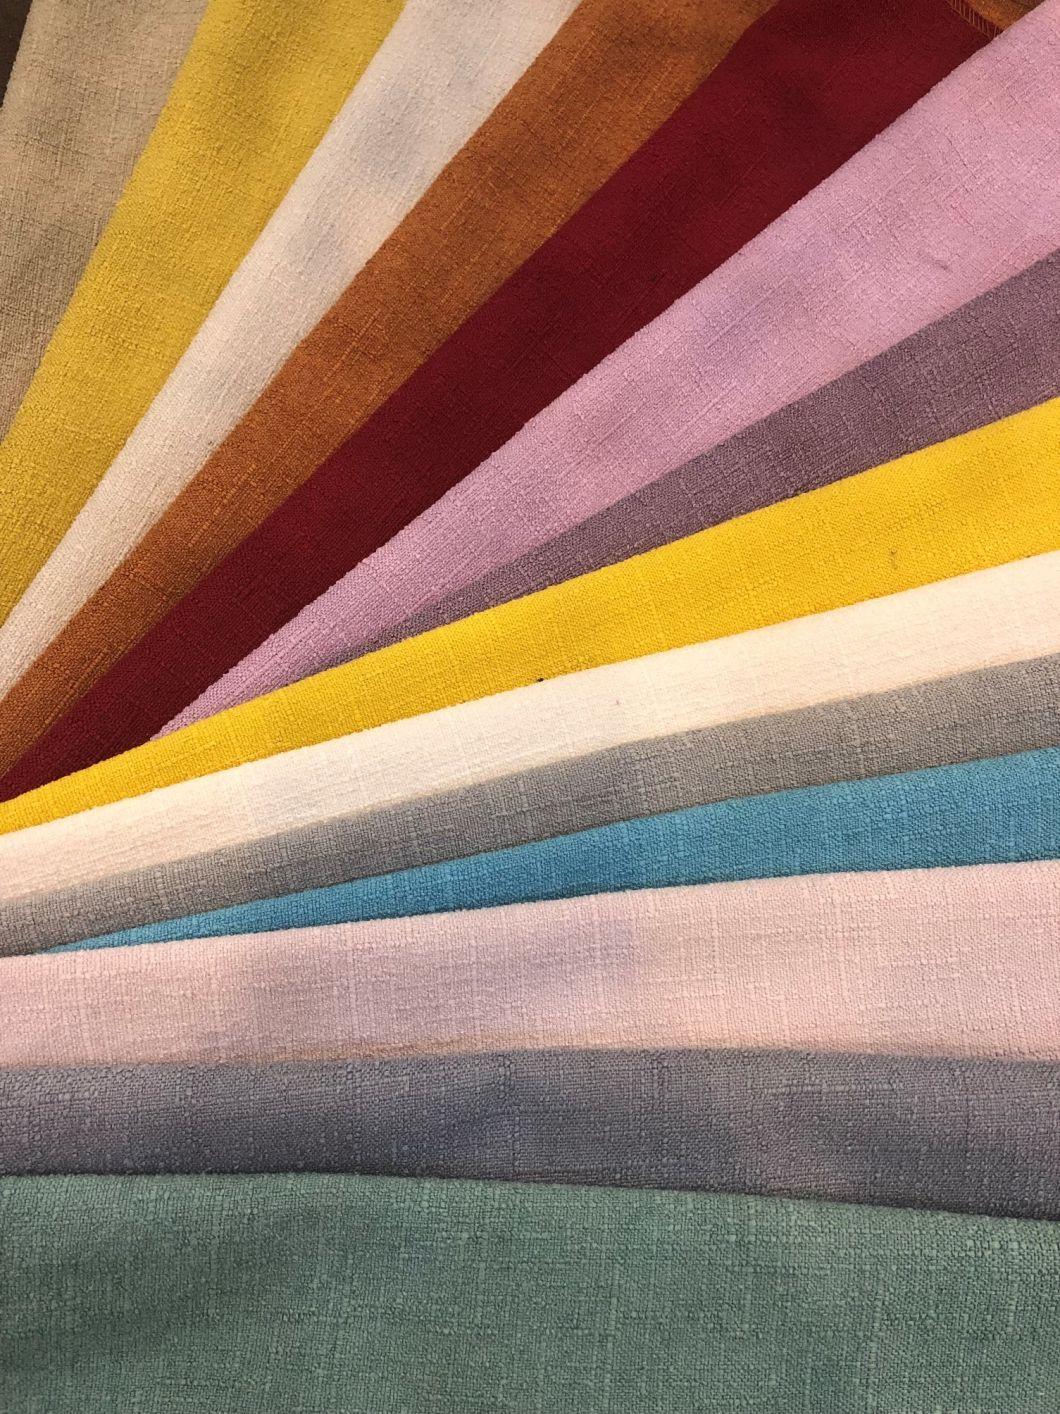 New Arrival Woven Sofa Fabric Furniture Fabric (2018)